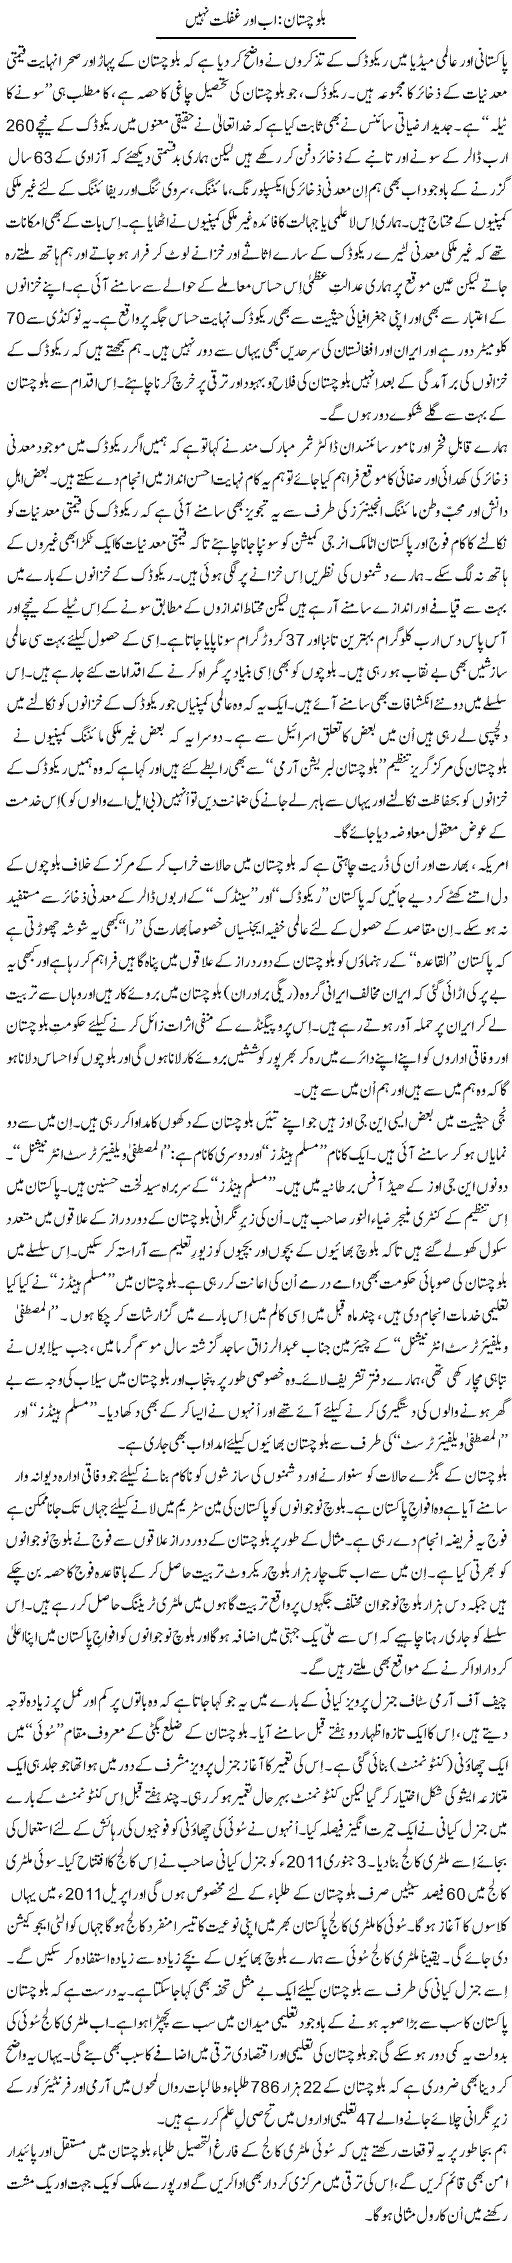 Gold in Balochistan Express Column Tanvir Qasir 20 January 2011